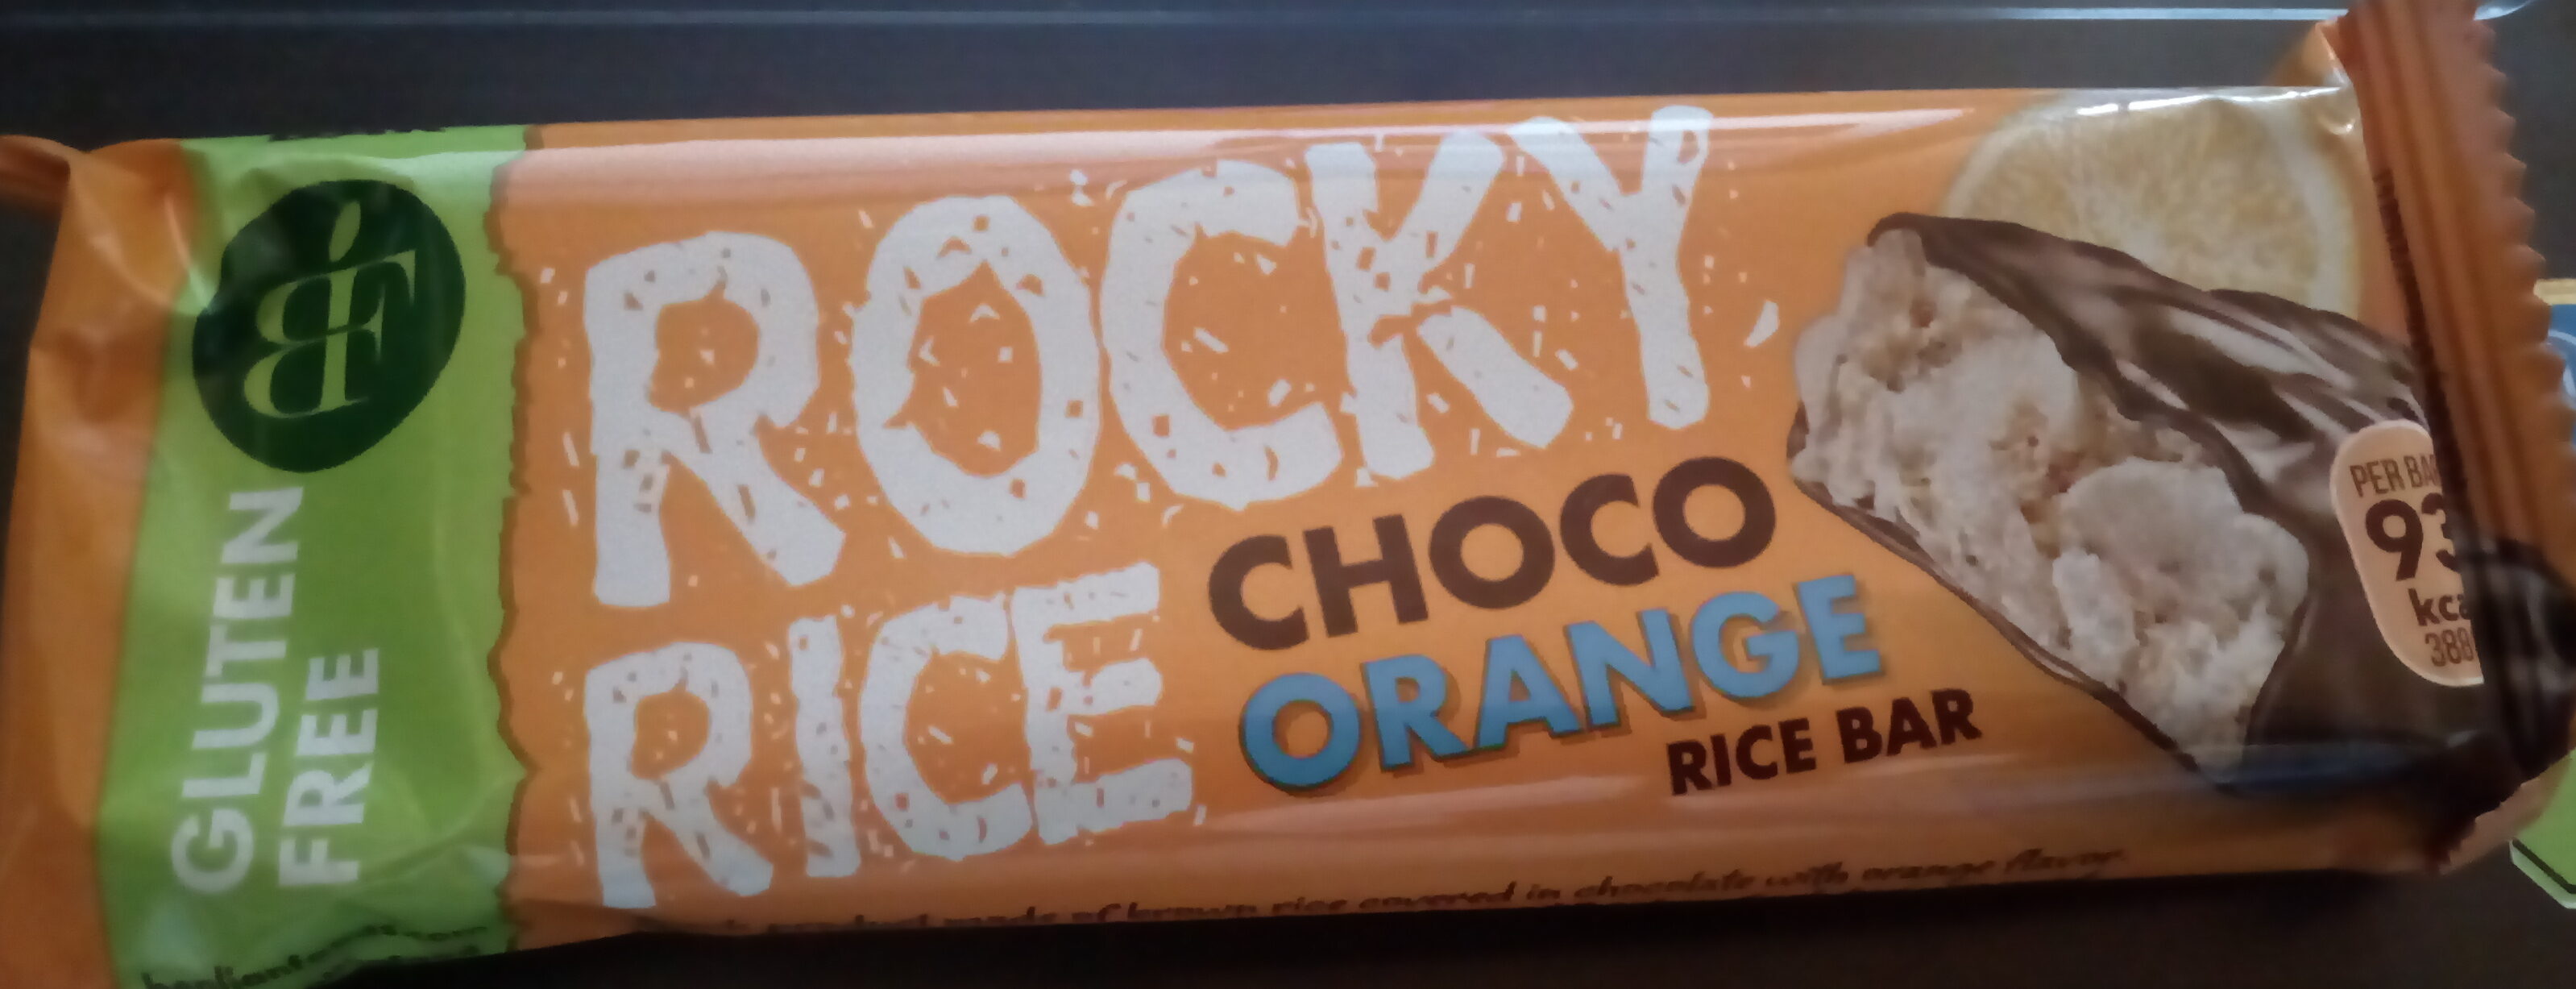 Rocky rice choco orange - Produit